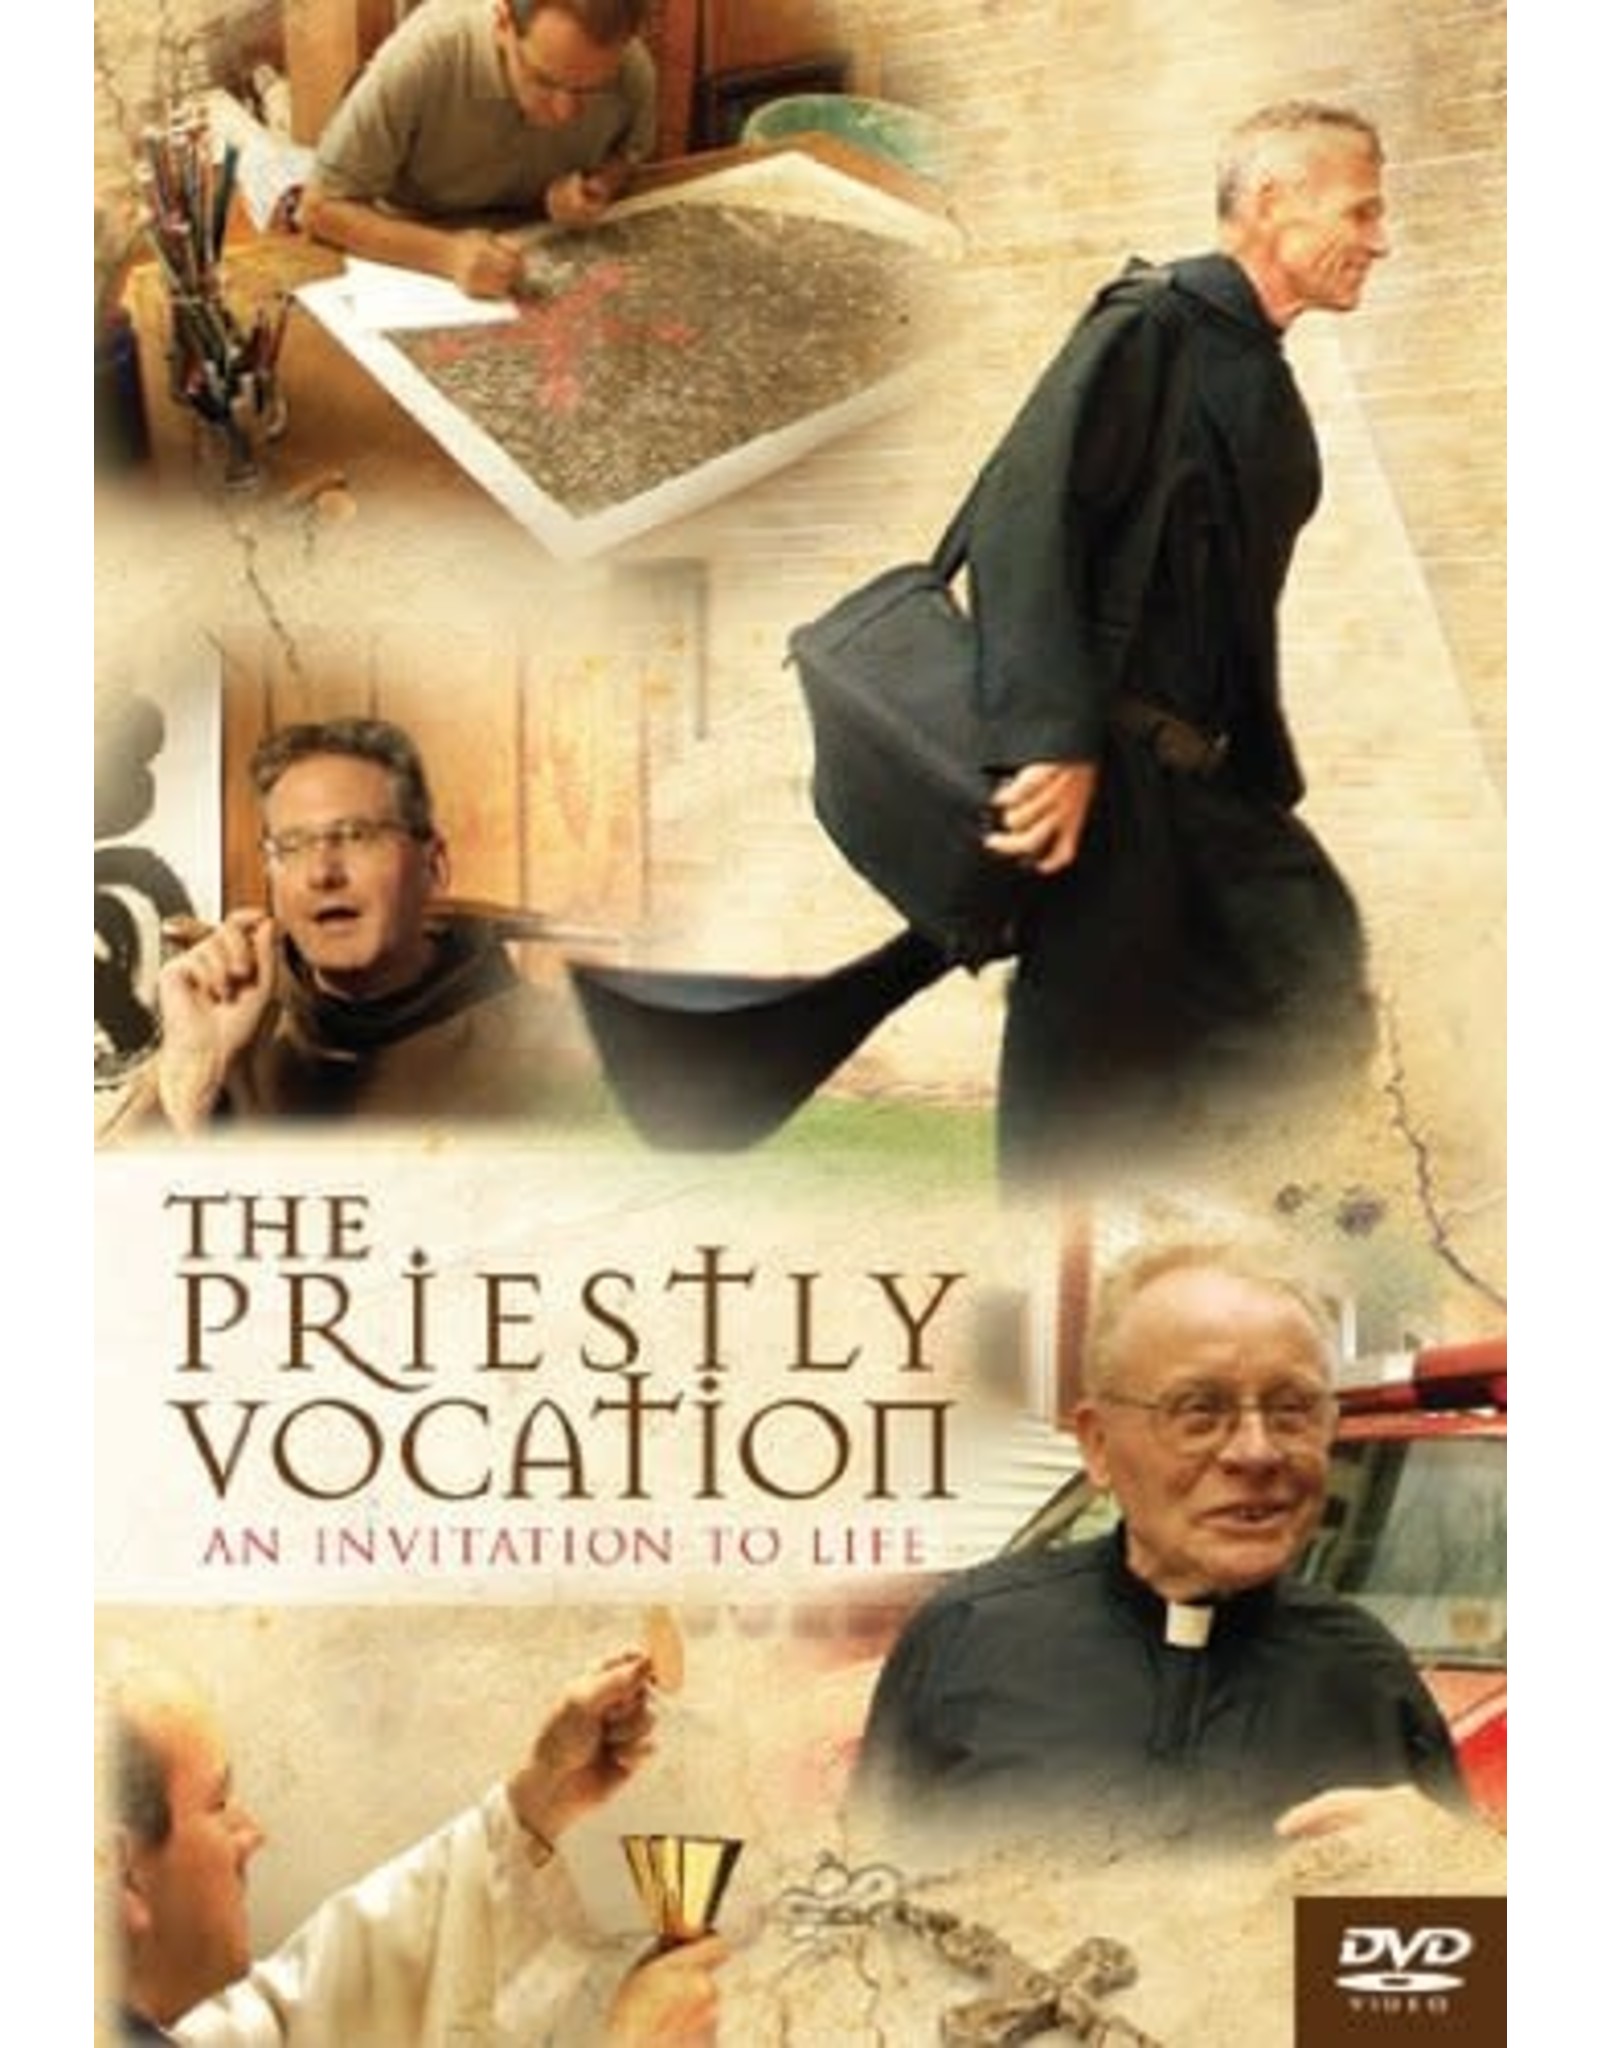 The Priestly Vocation DVD